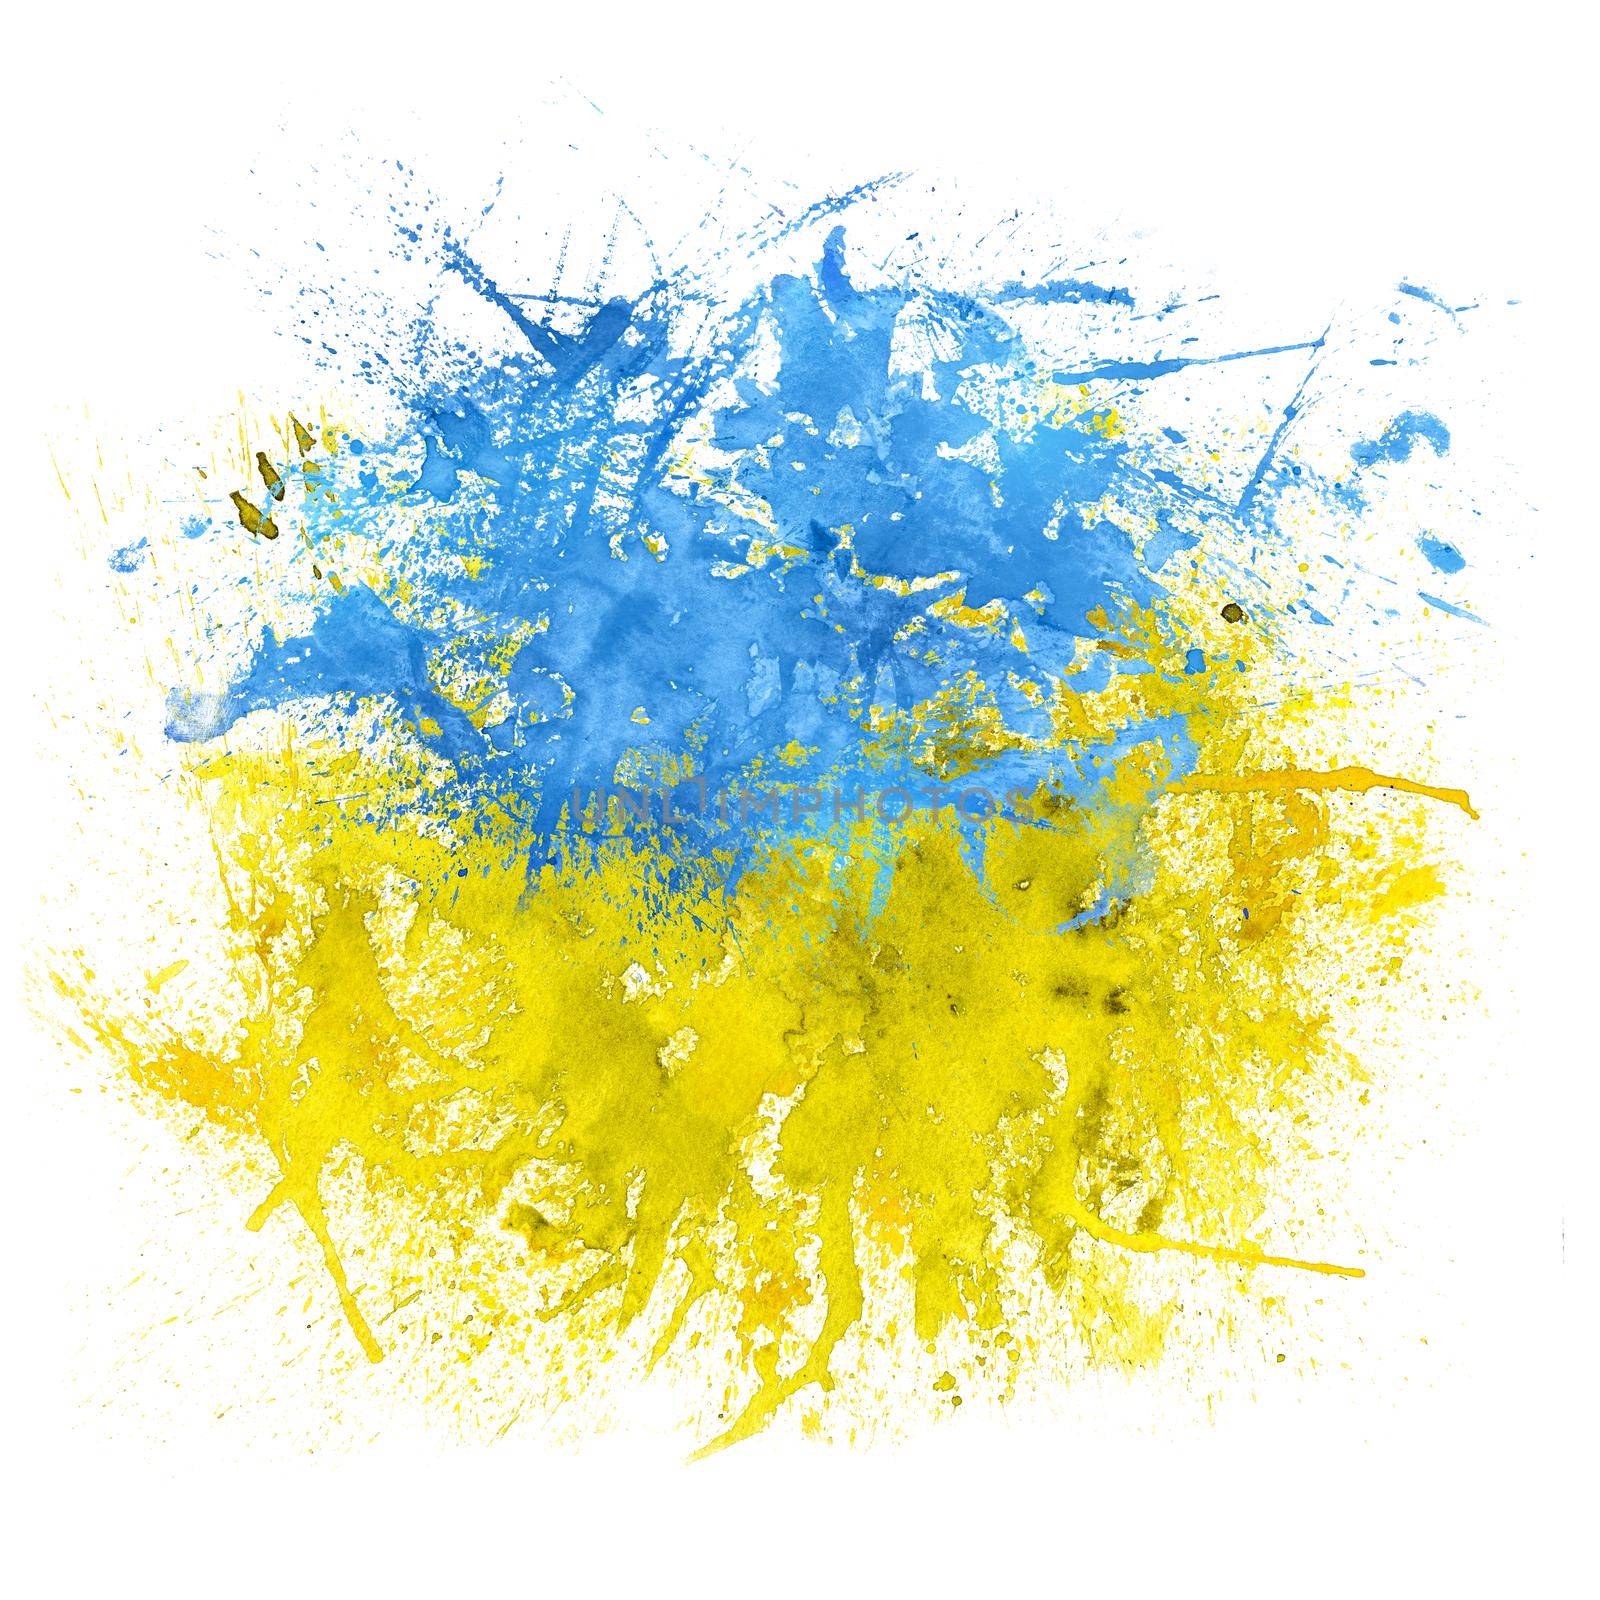 Creative political illustration with Ukraine symbol